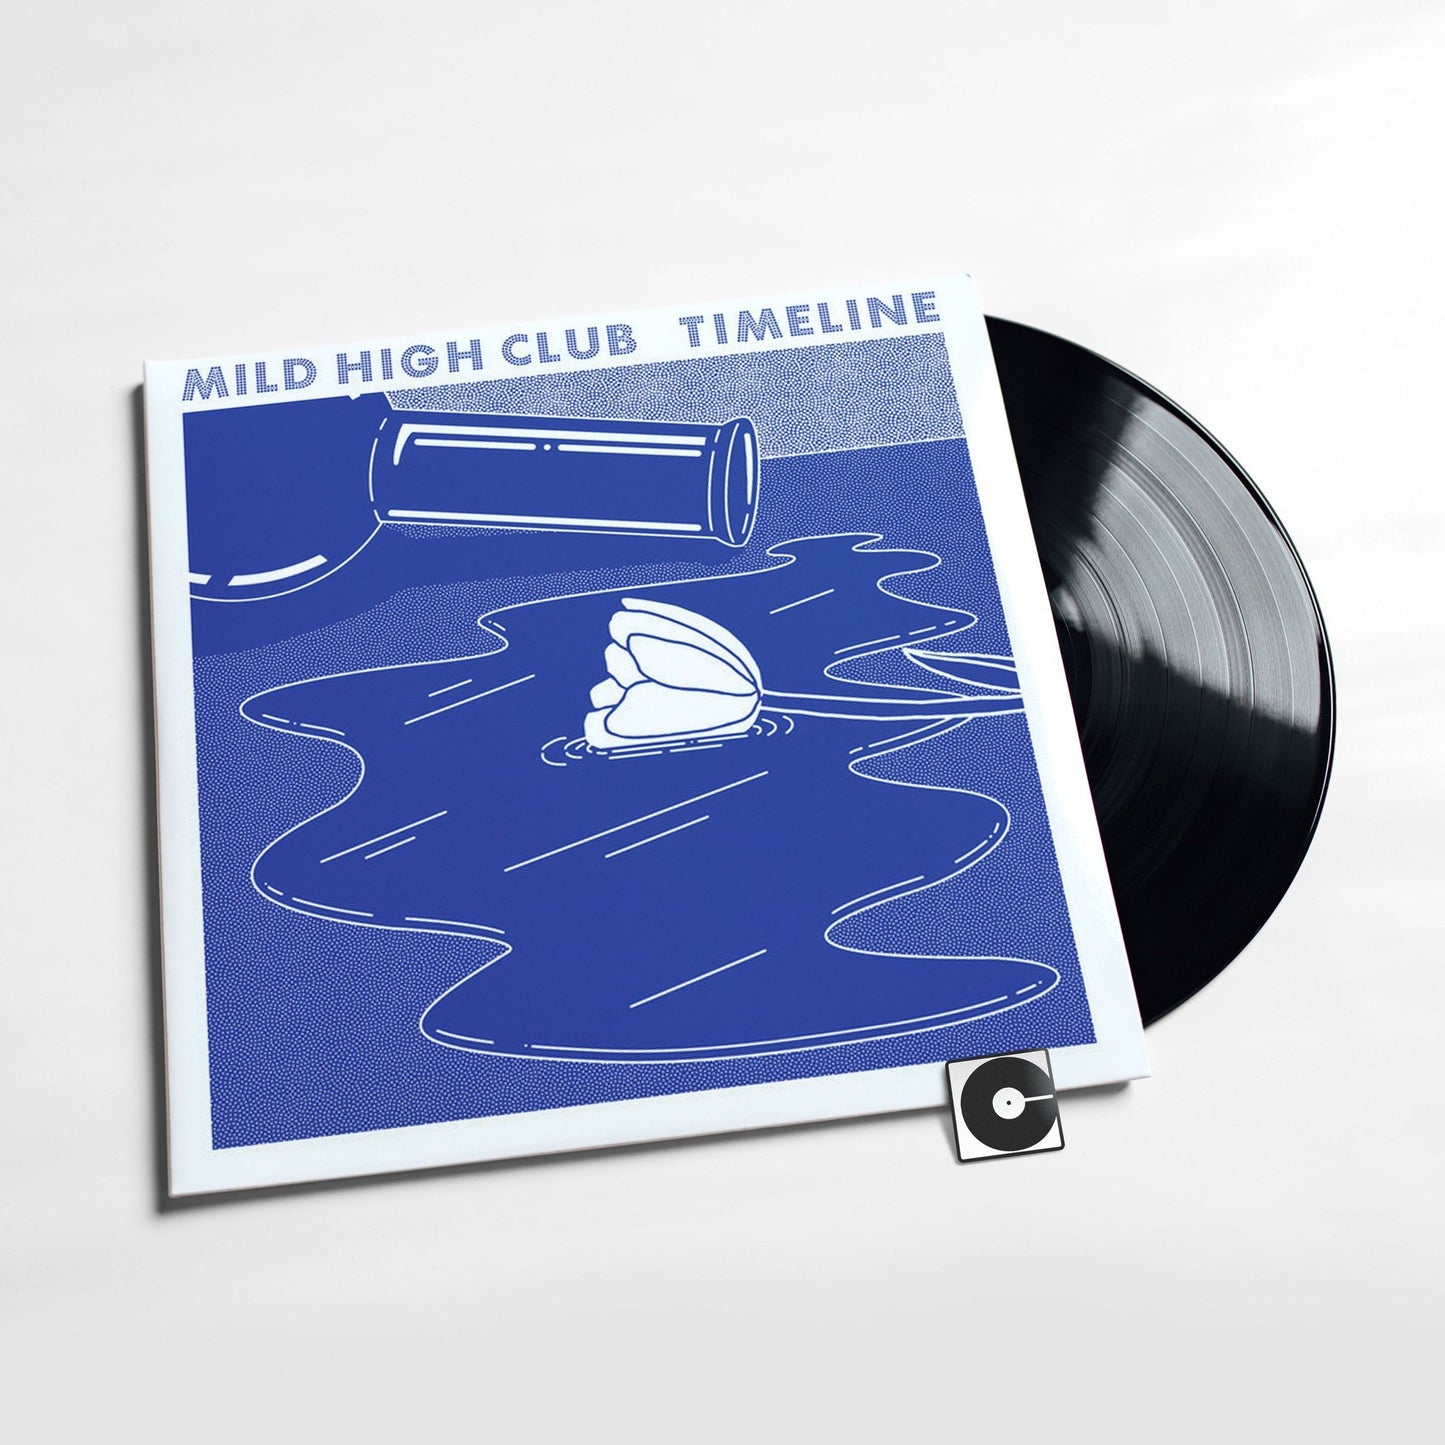 Mild High Club - "Timeline"